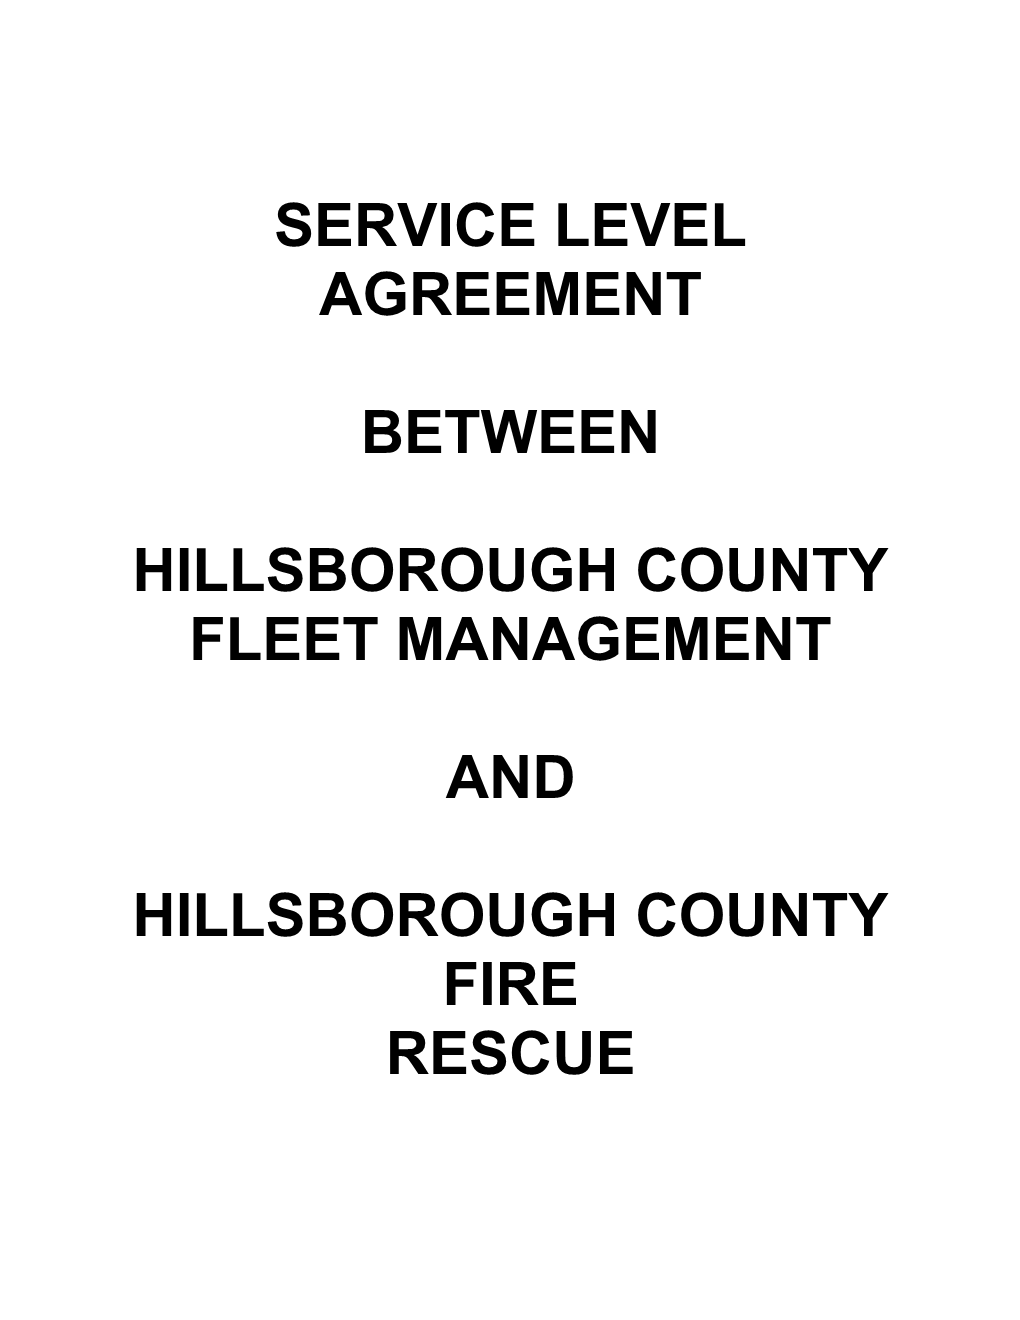 Hillsborough County Fleet Management Fire Rescue